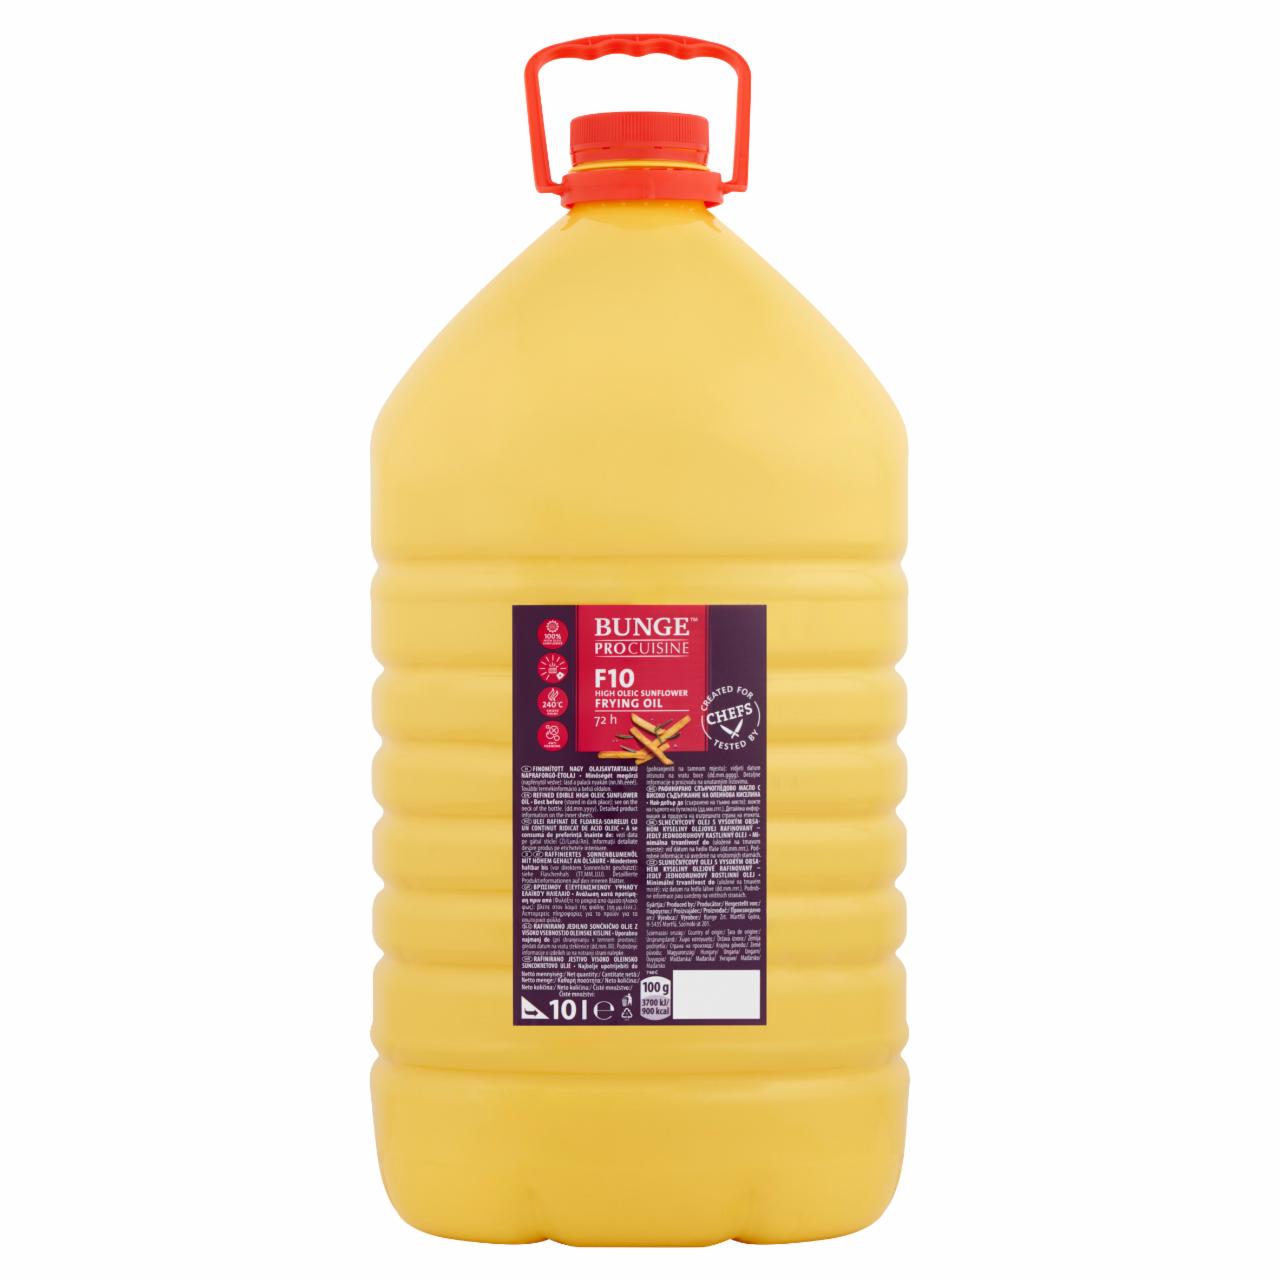 Photo - Bunge ProCuisine F10 Refined Edible High Oleic Sunflower Oil 10 l